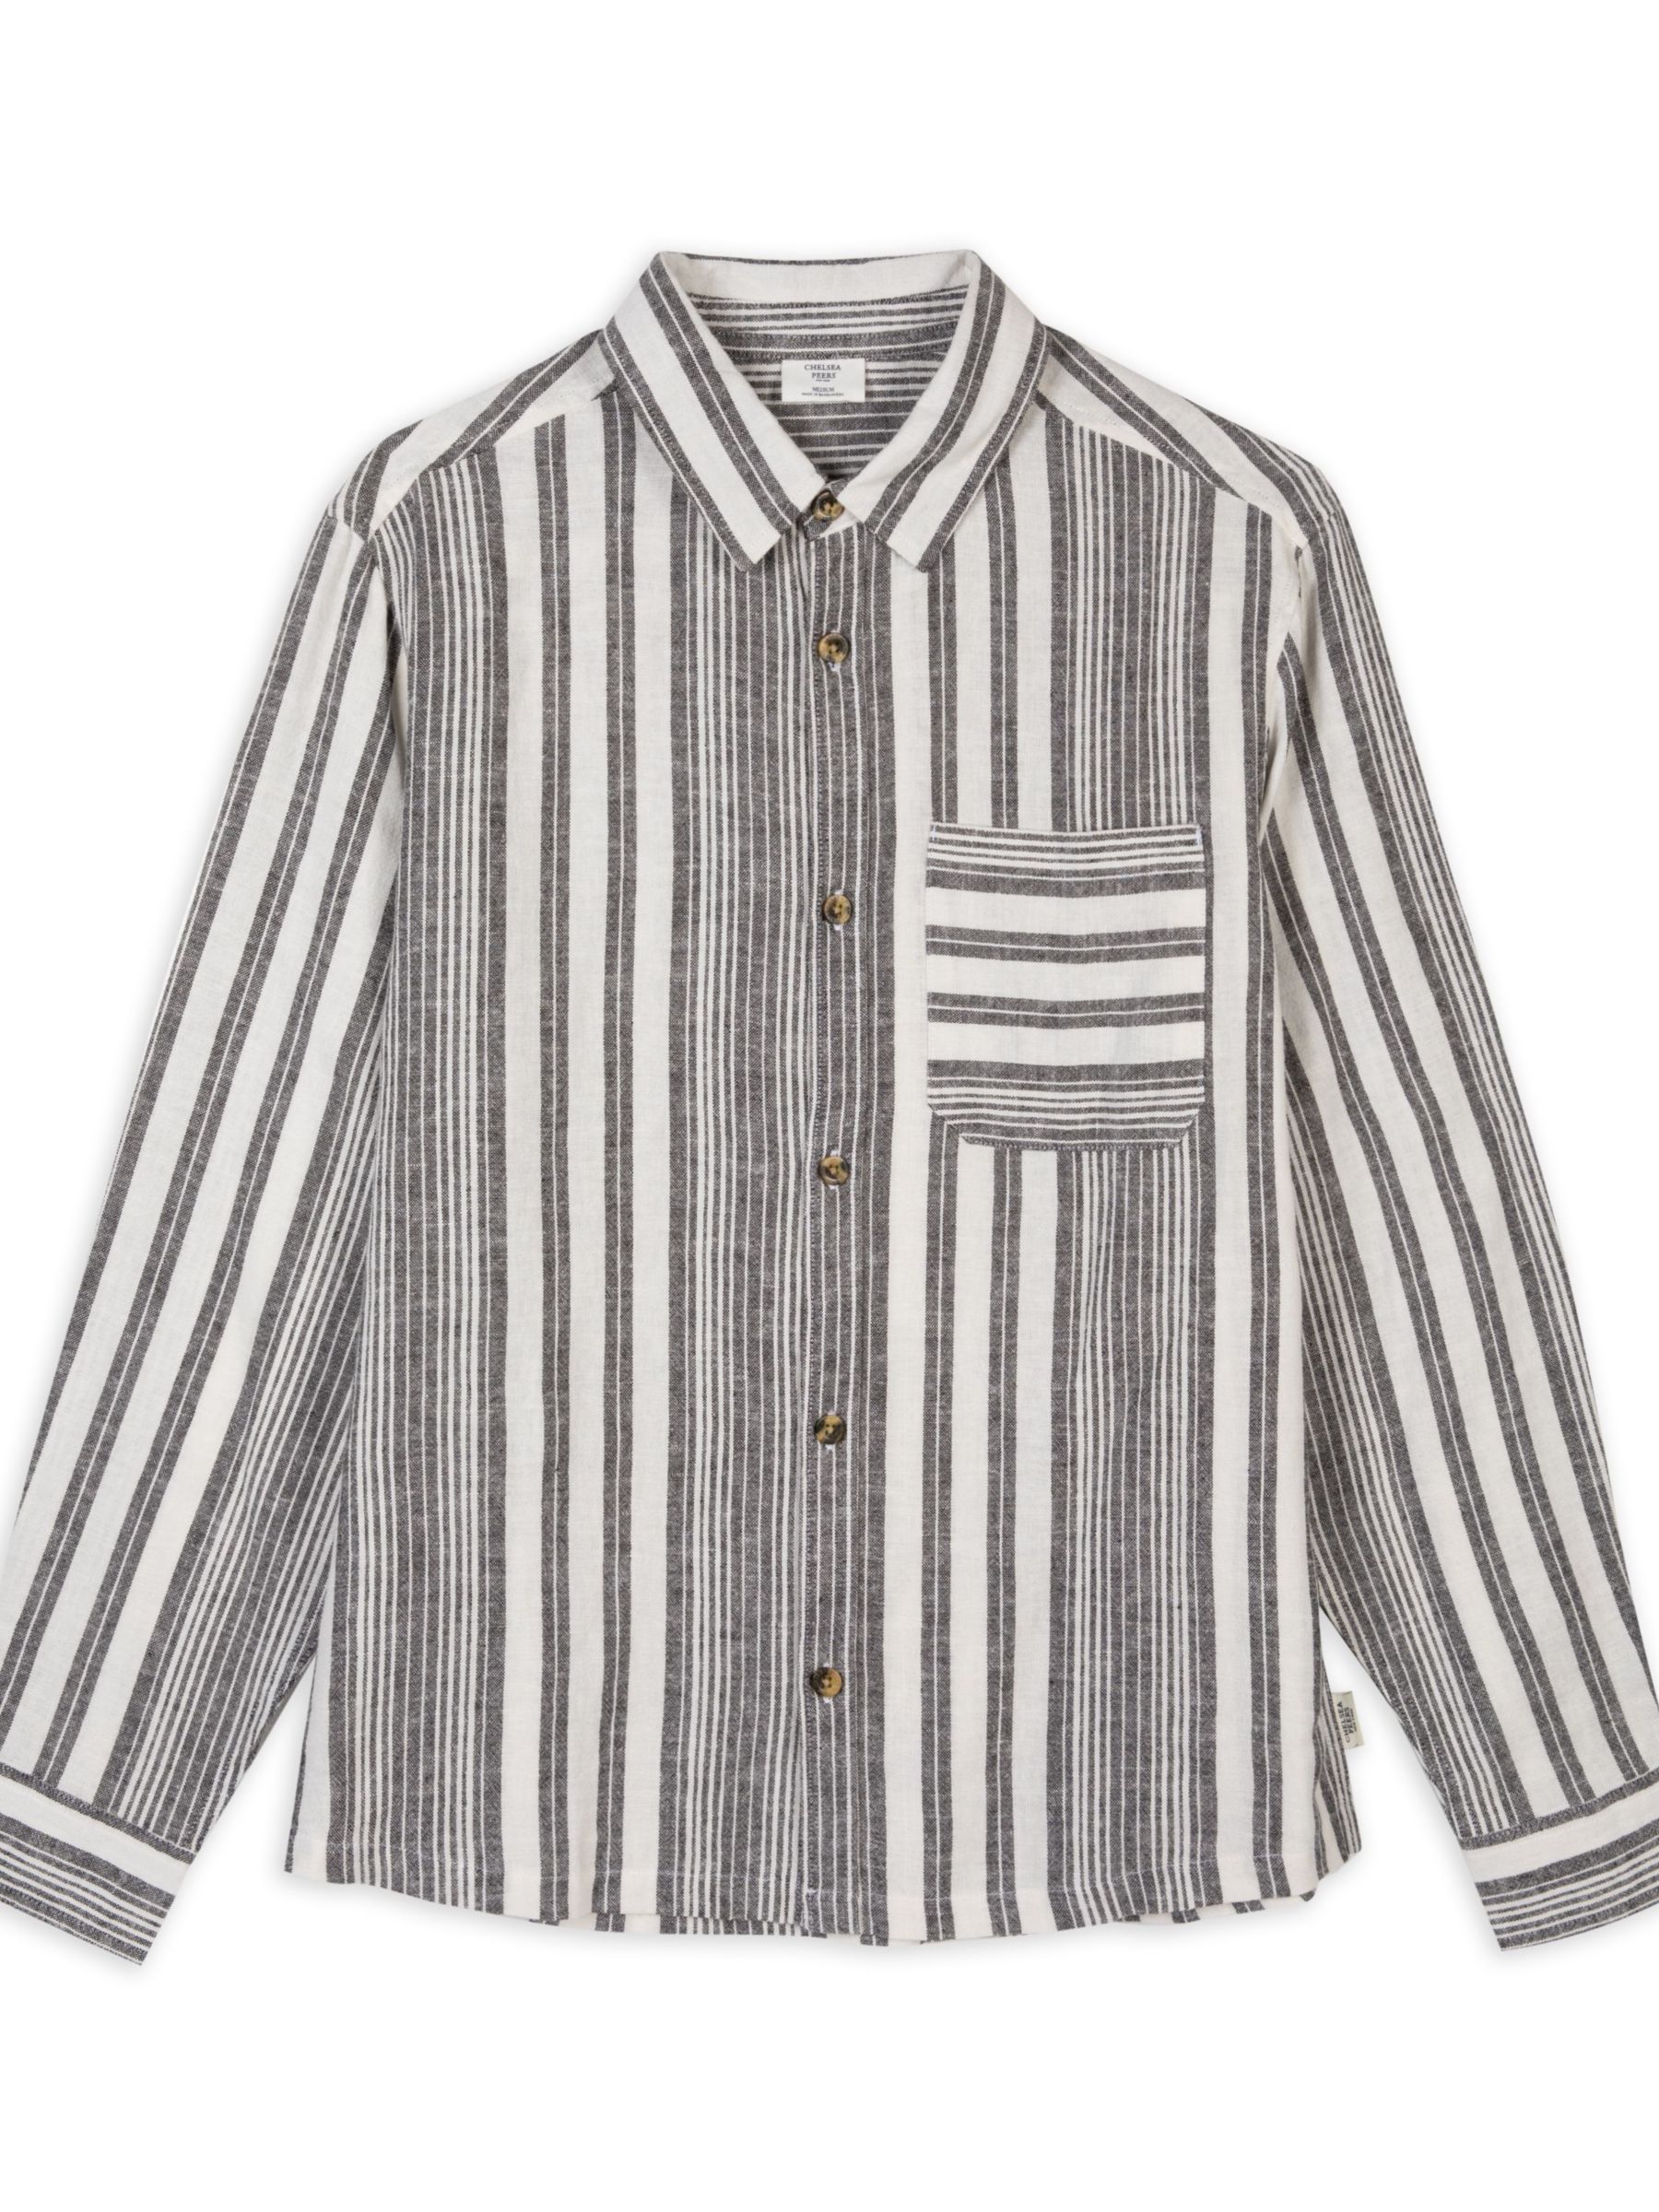 Buy Chelsea Peers Linen Blend Stripe Shirt, Off White/Grey Online at johnlewis.com